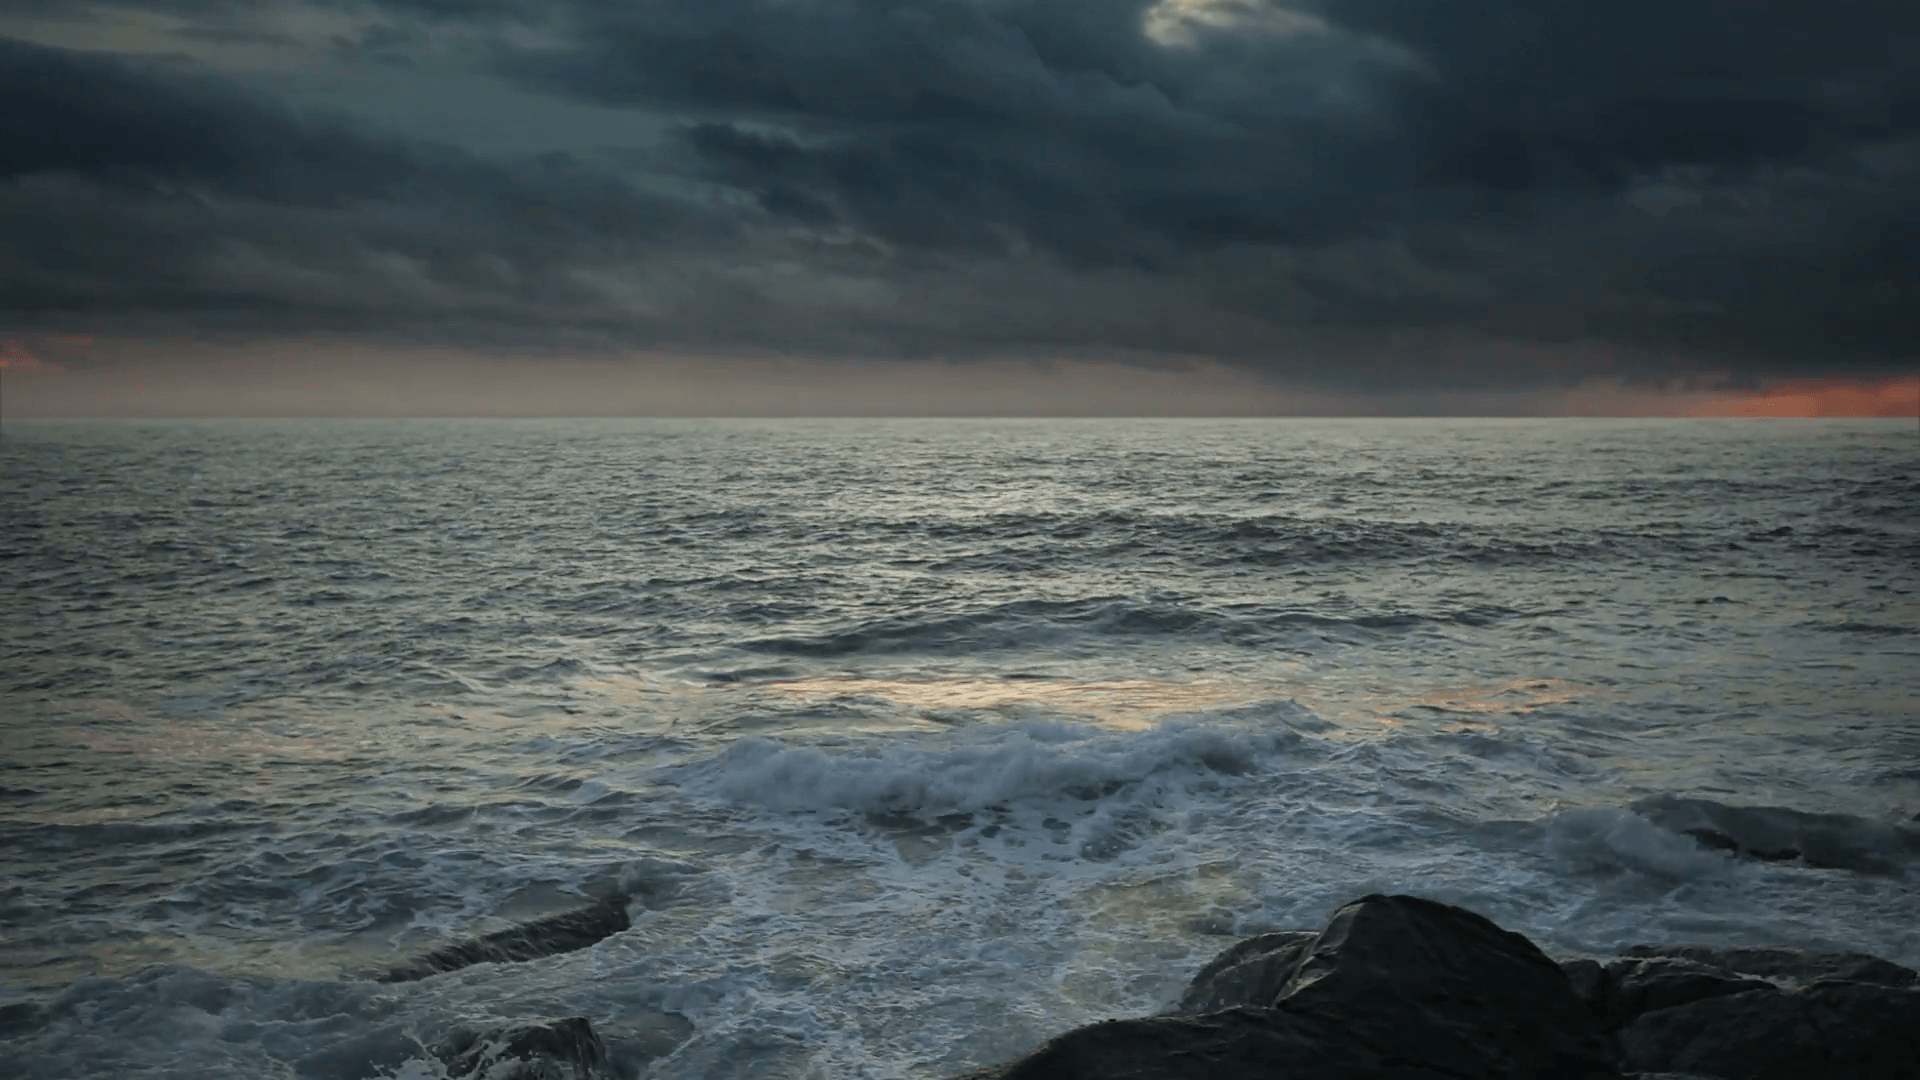 dark and stormy sea ]. [Art] Photography. Stormy sea